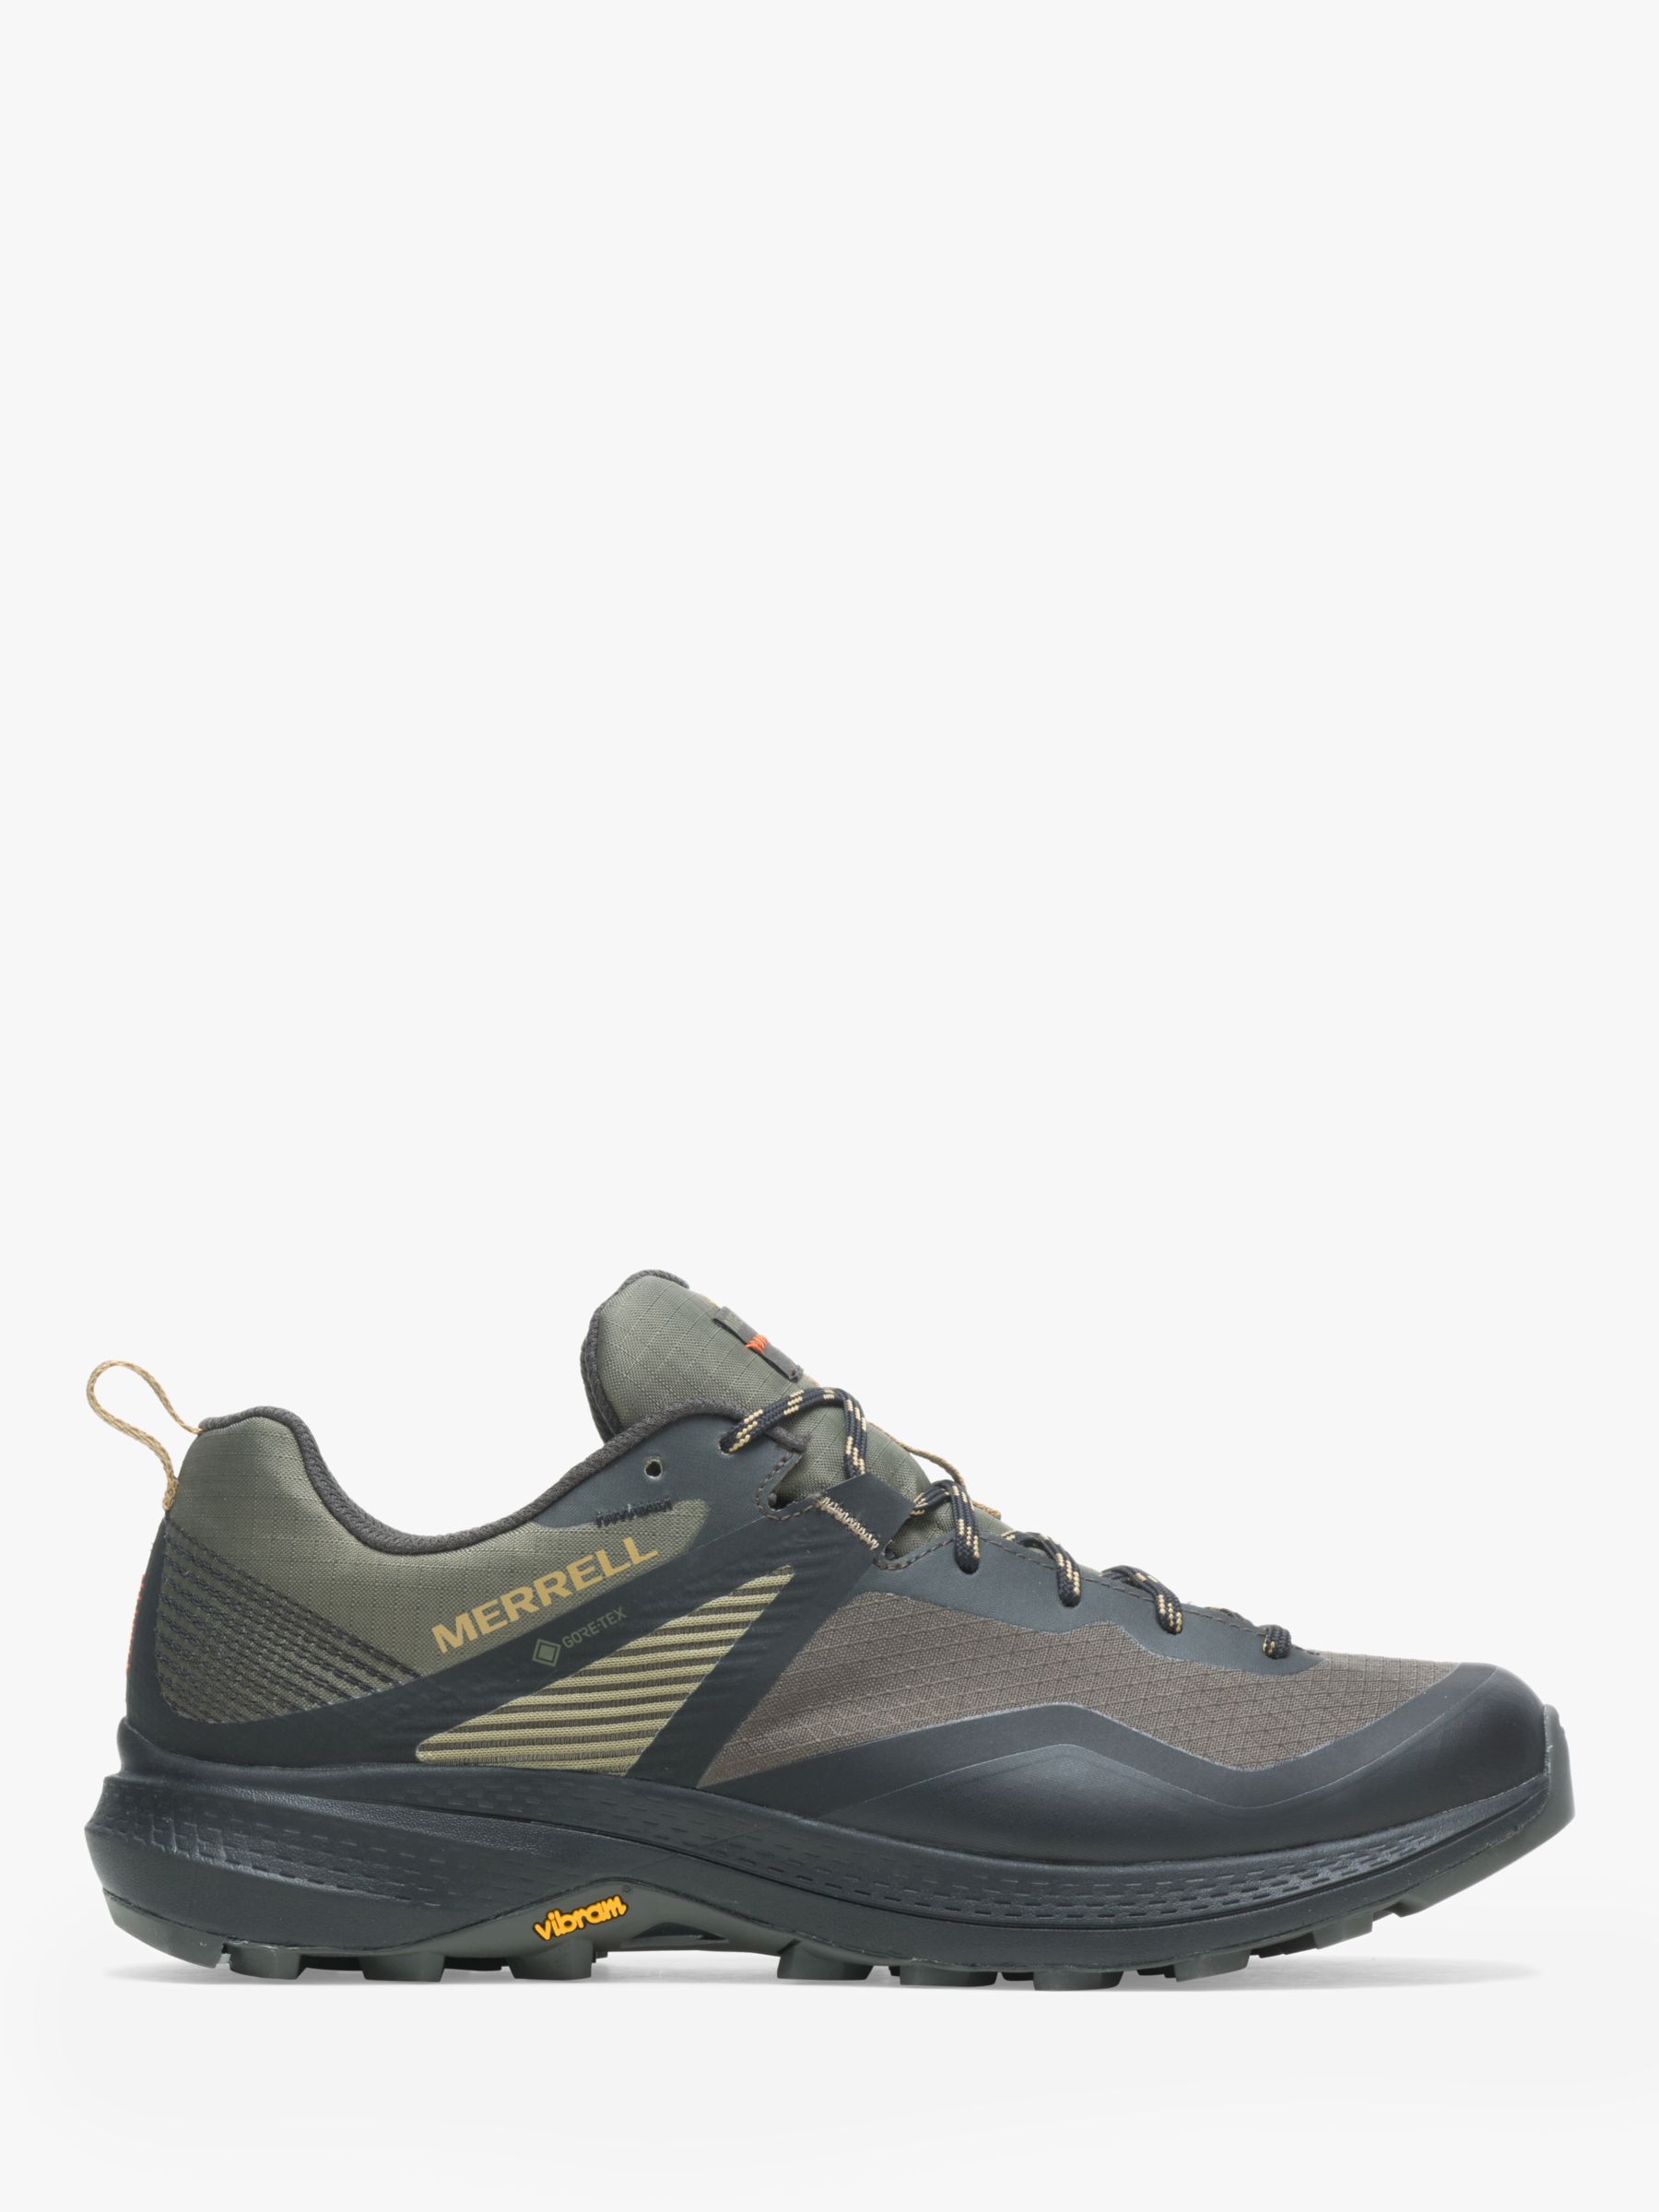 Merrell MQM 3 Men's Waterproof Gore-Tex Walking Shoes at John Lewis ...